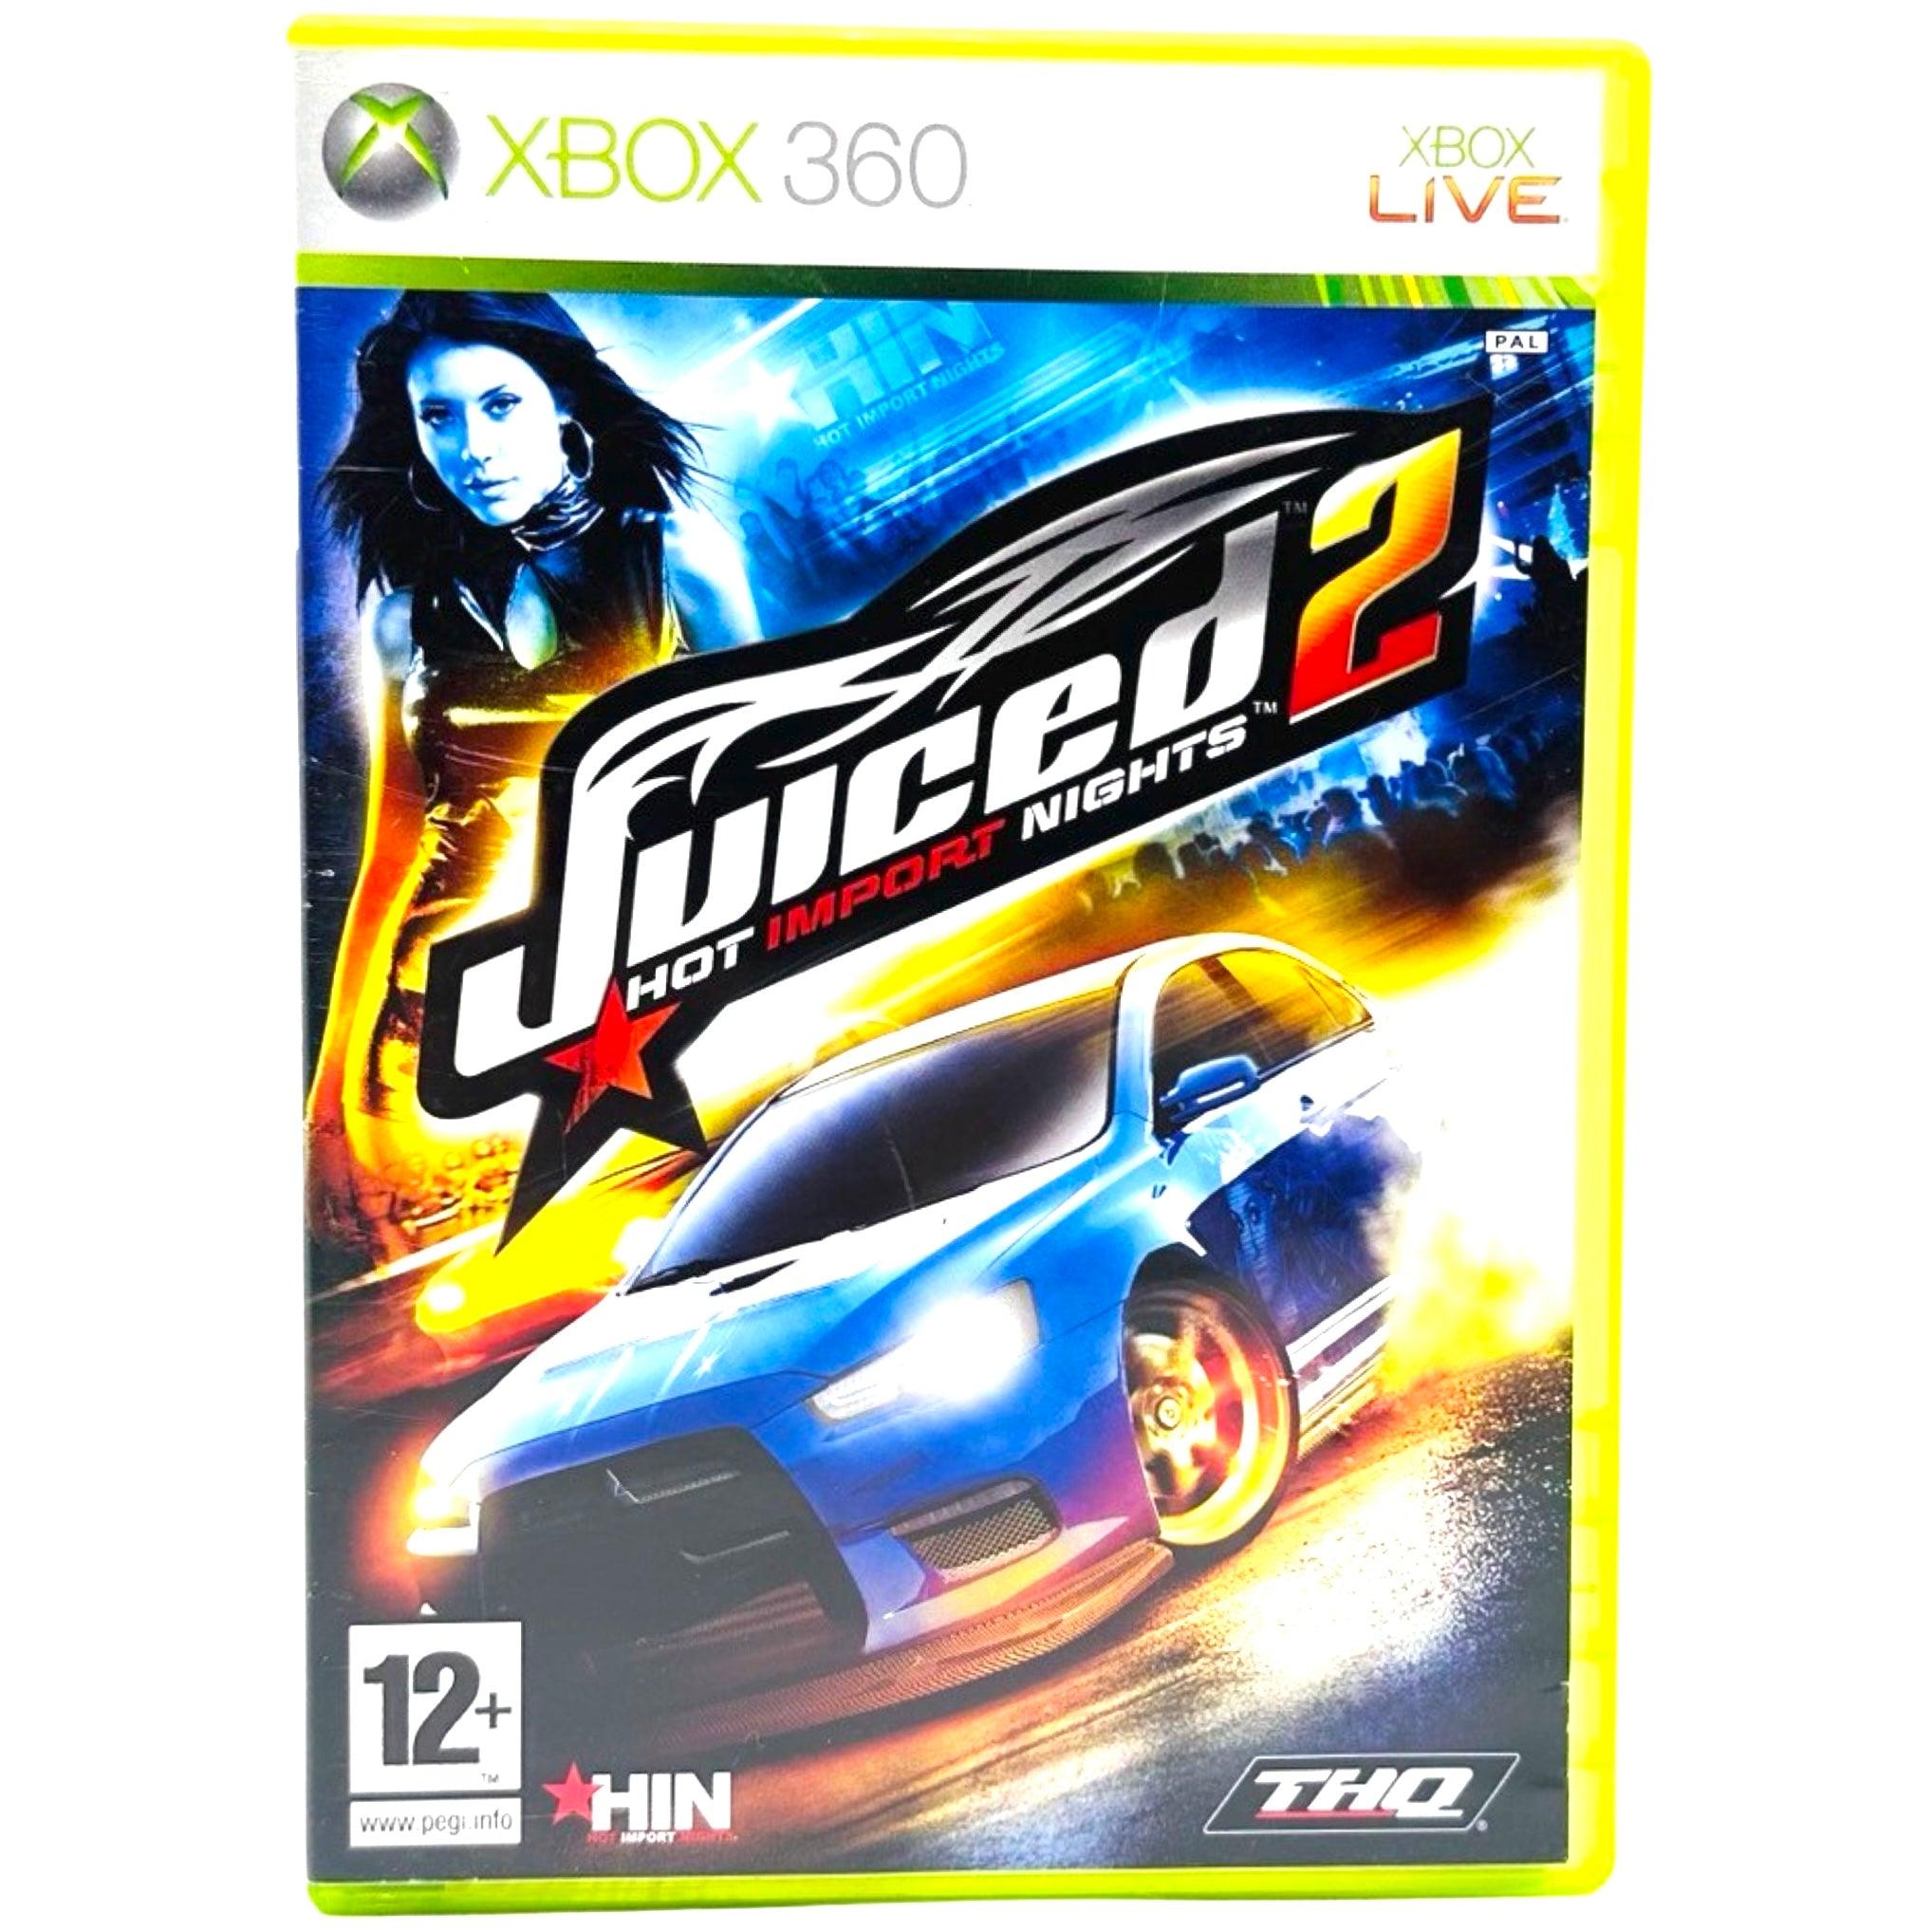 Xbox 360: Juiced 2: Hot Import Nights - RetroGaming.no